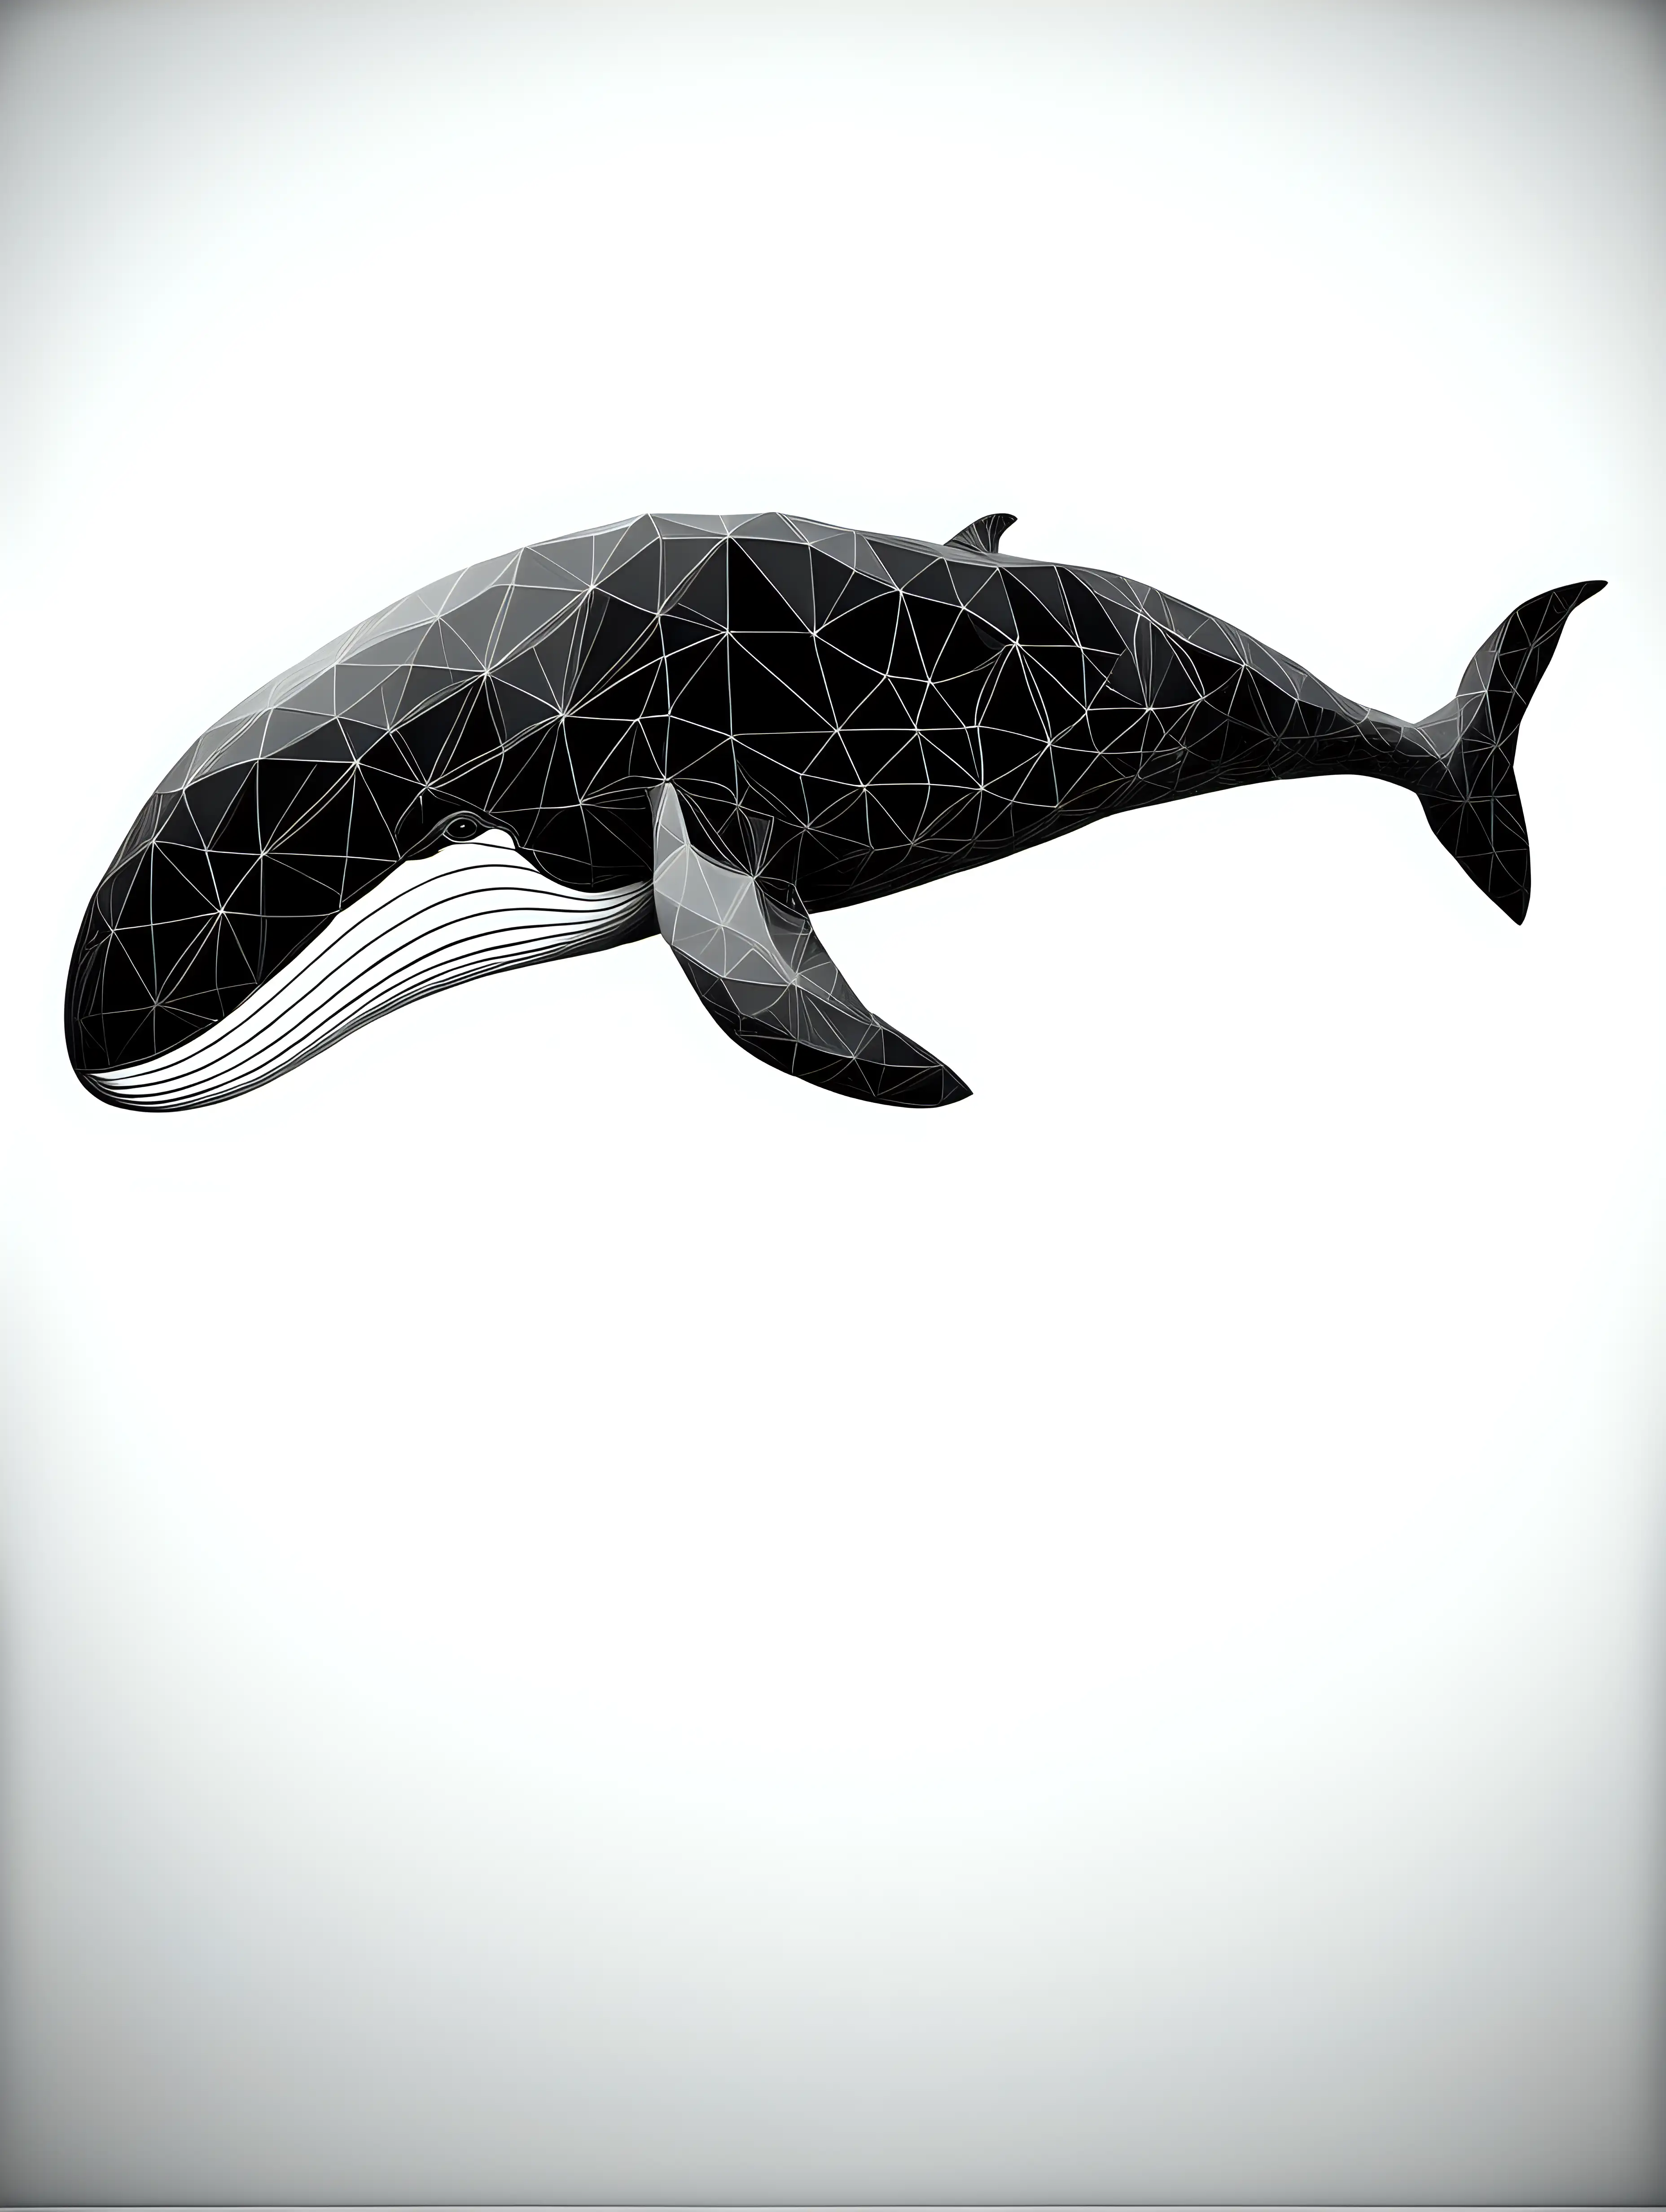 geometric sperm whale in black & white max size 12 mb